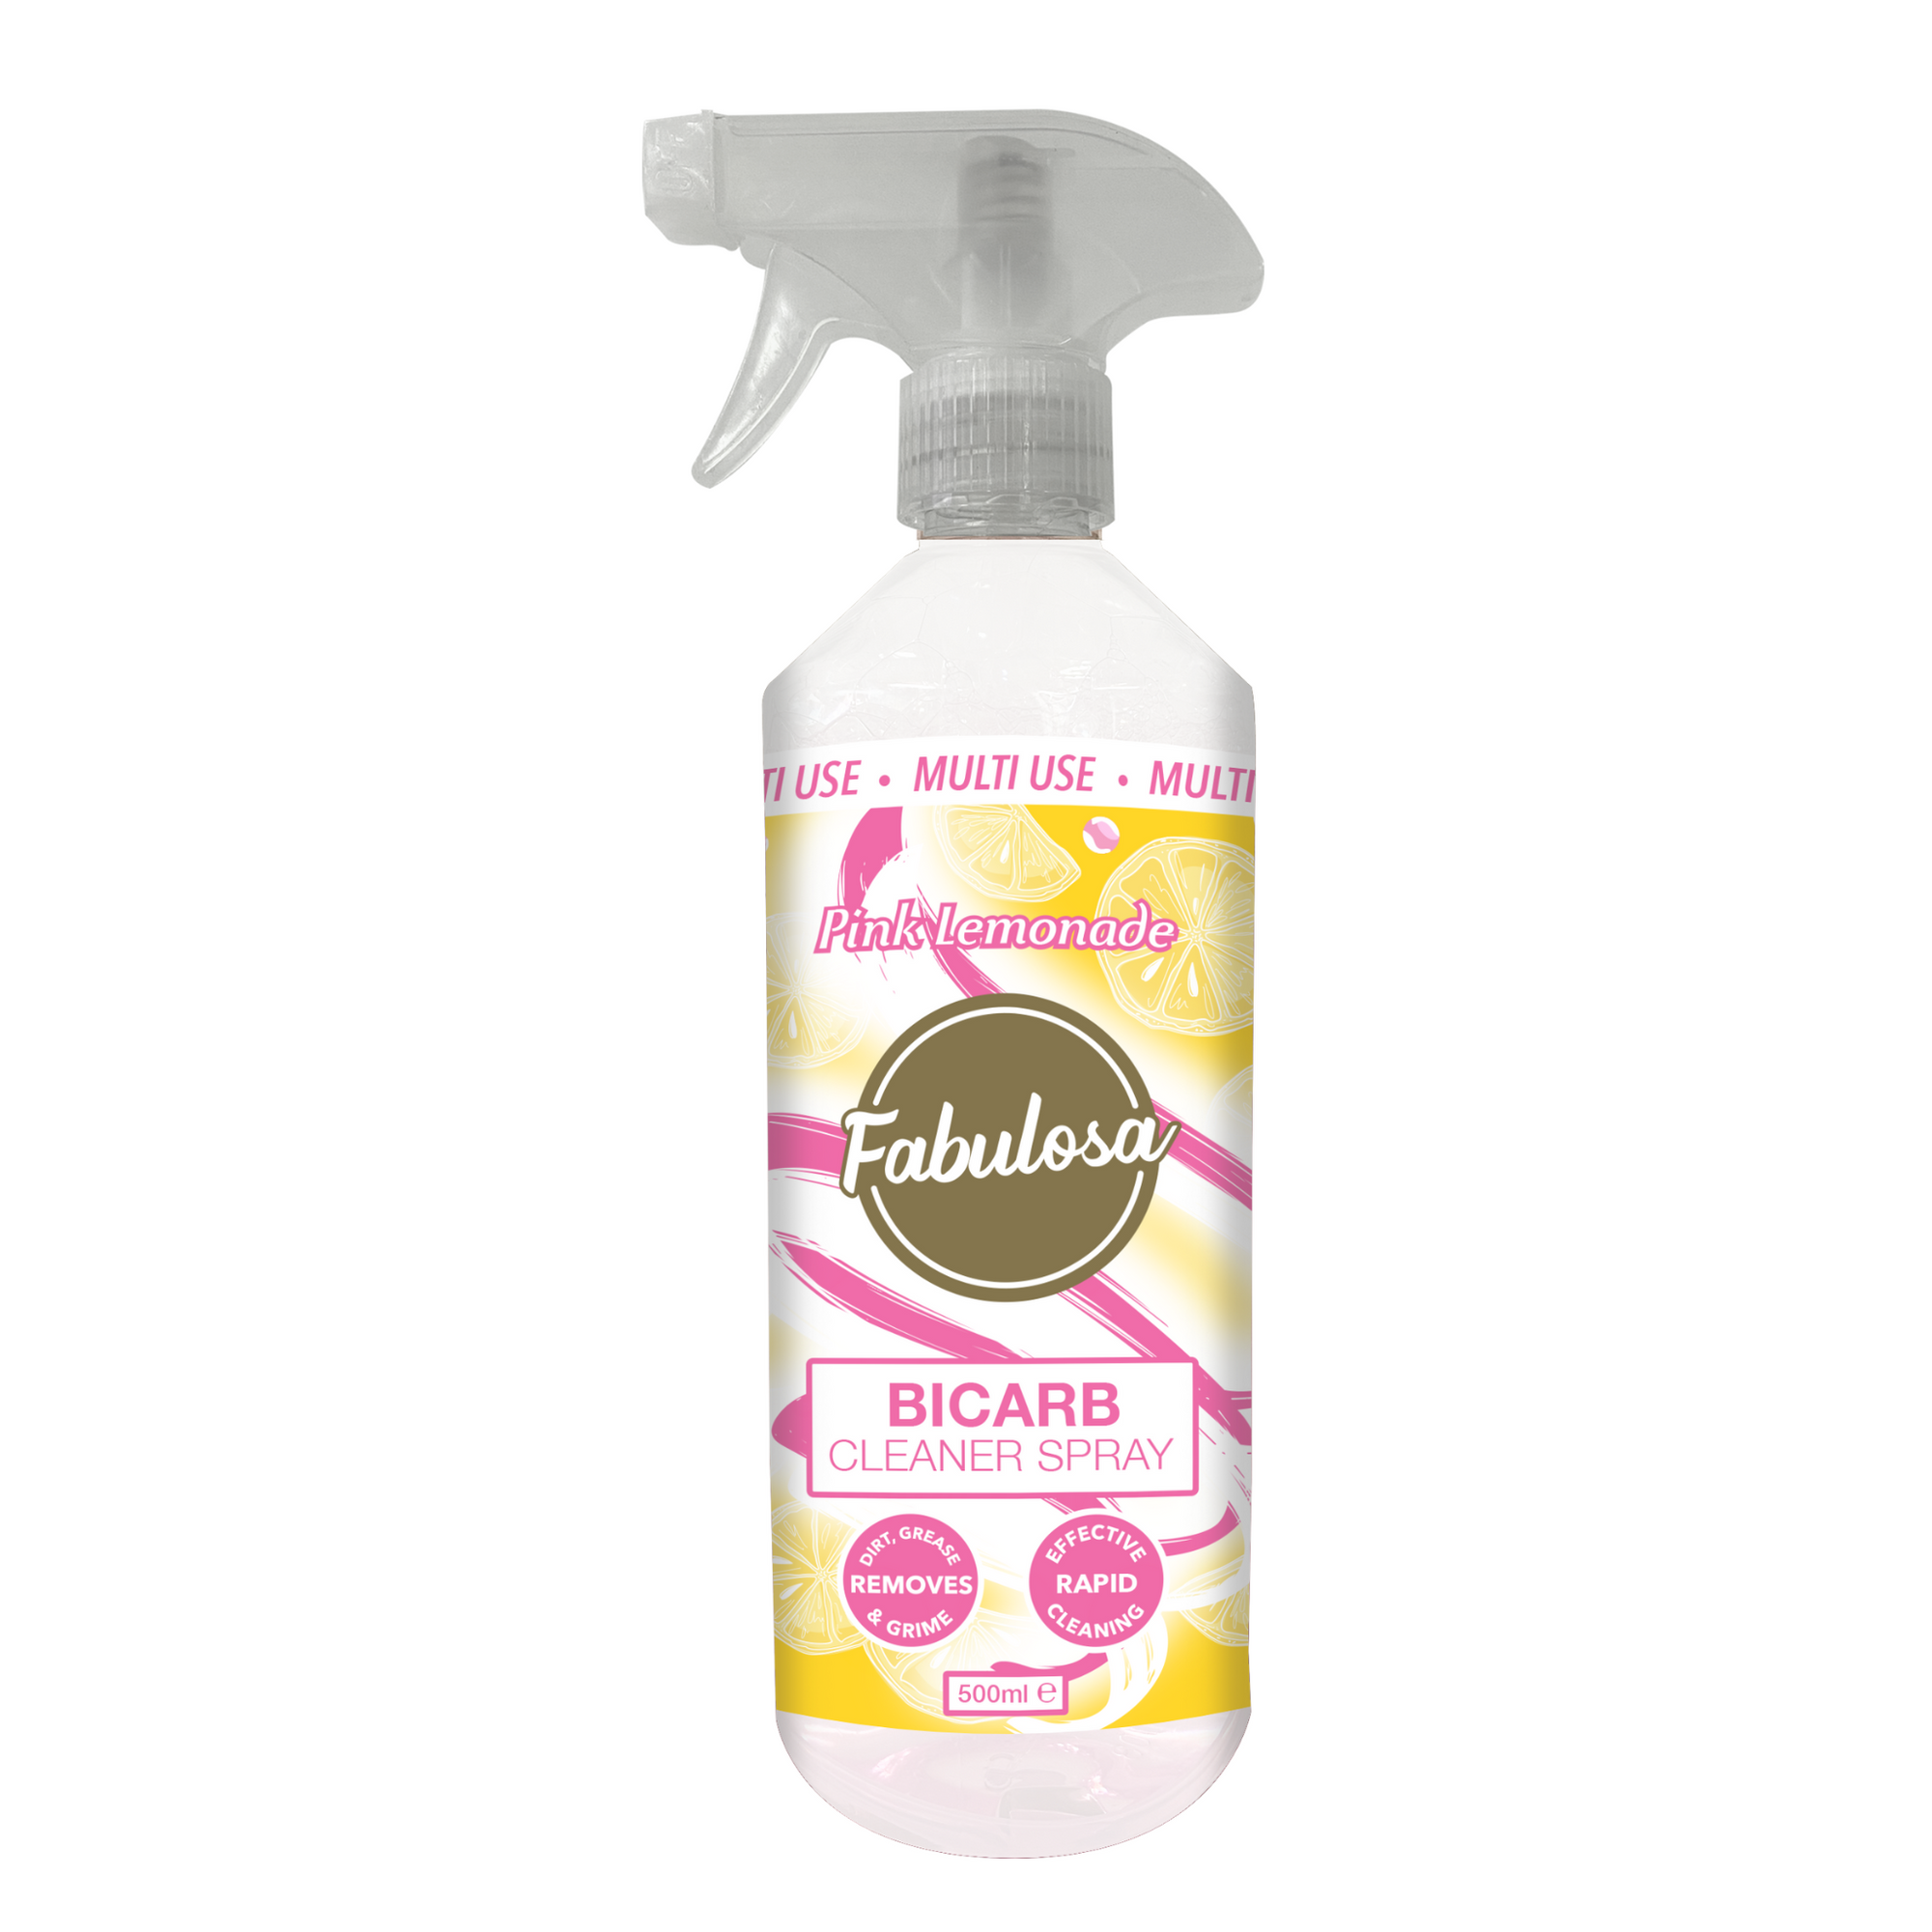 Fabulosa Bicarb Cleaner Spray - Pink Lemonade (500ml)